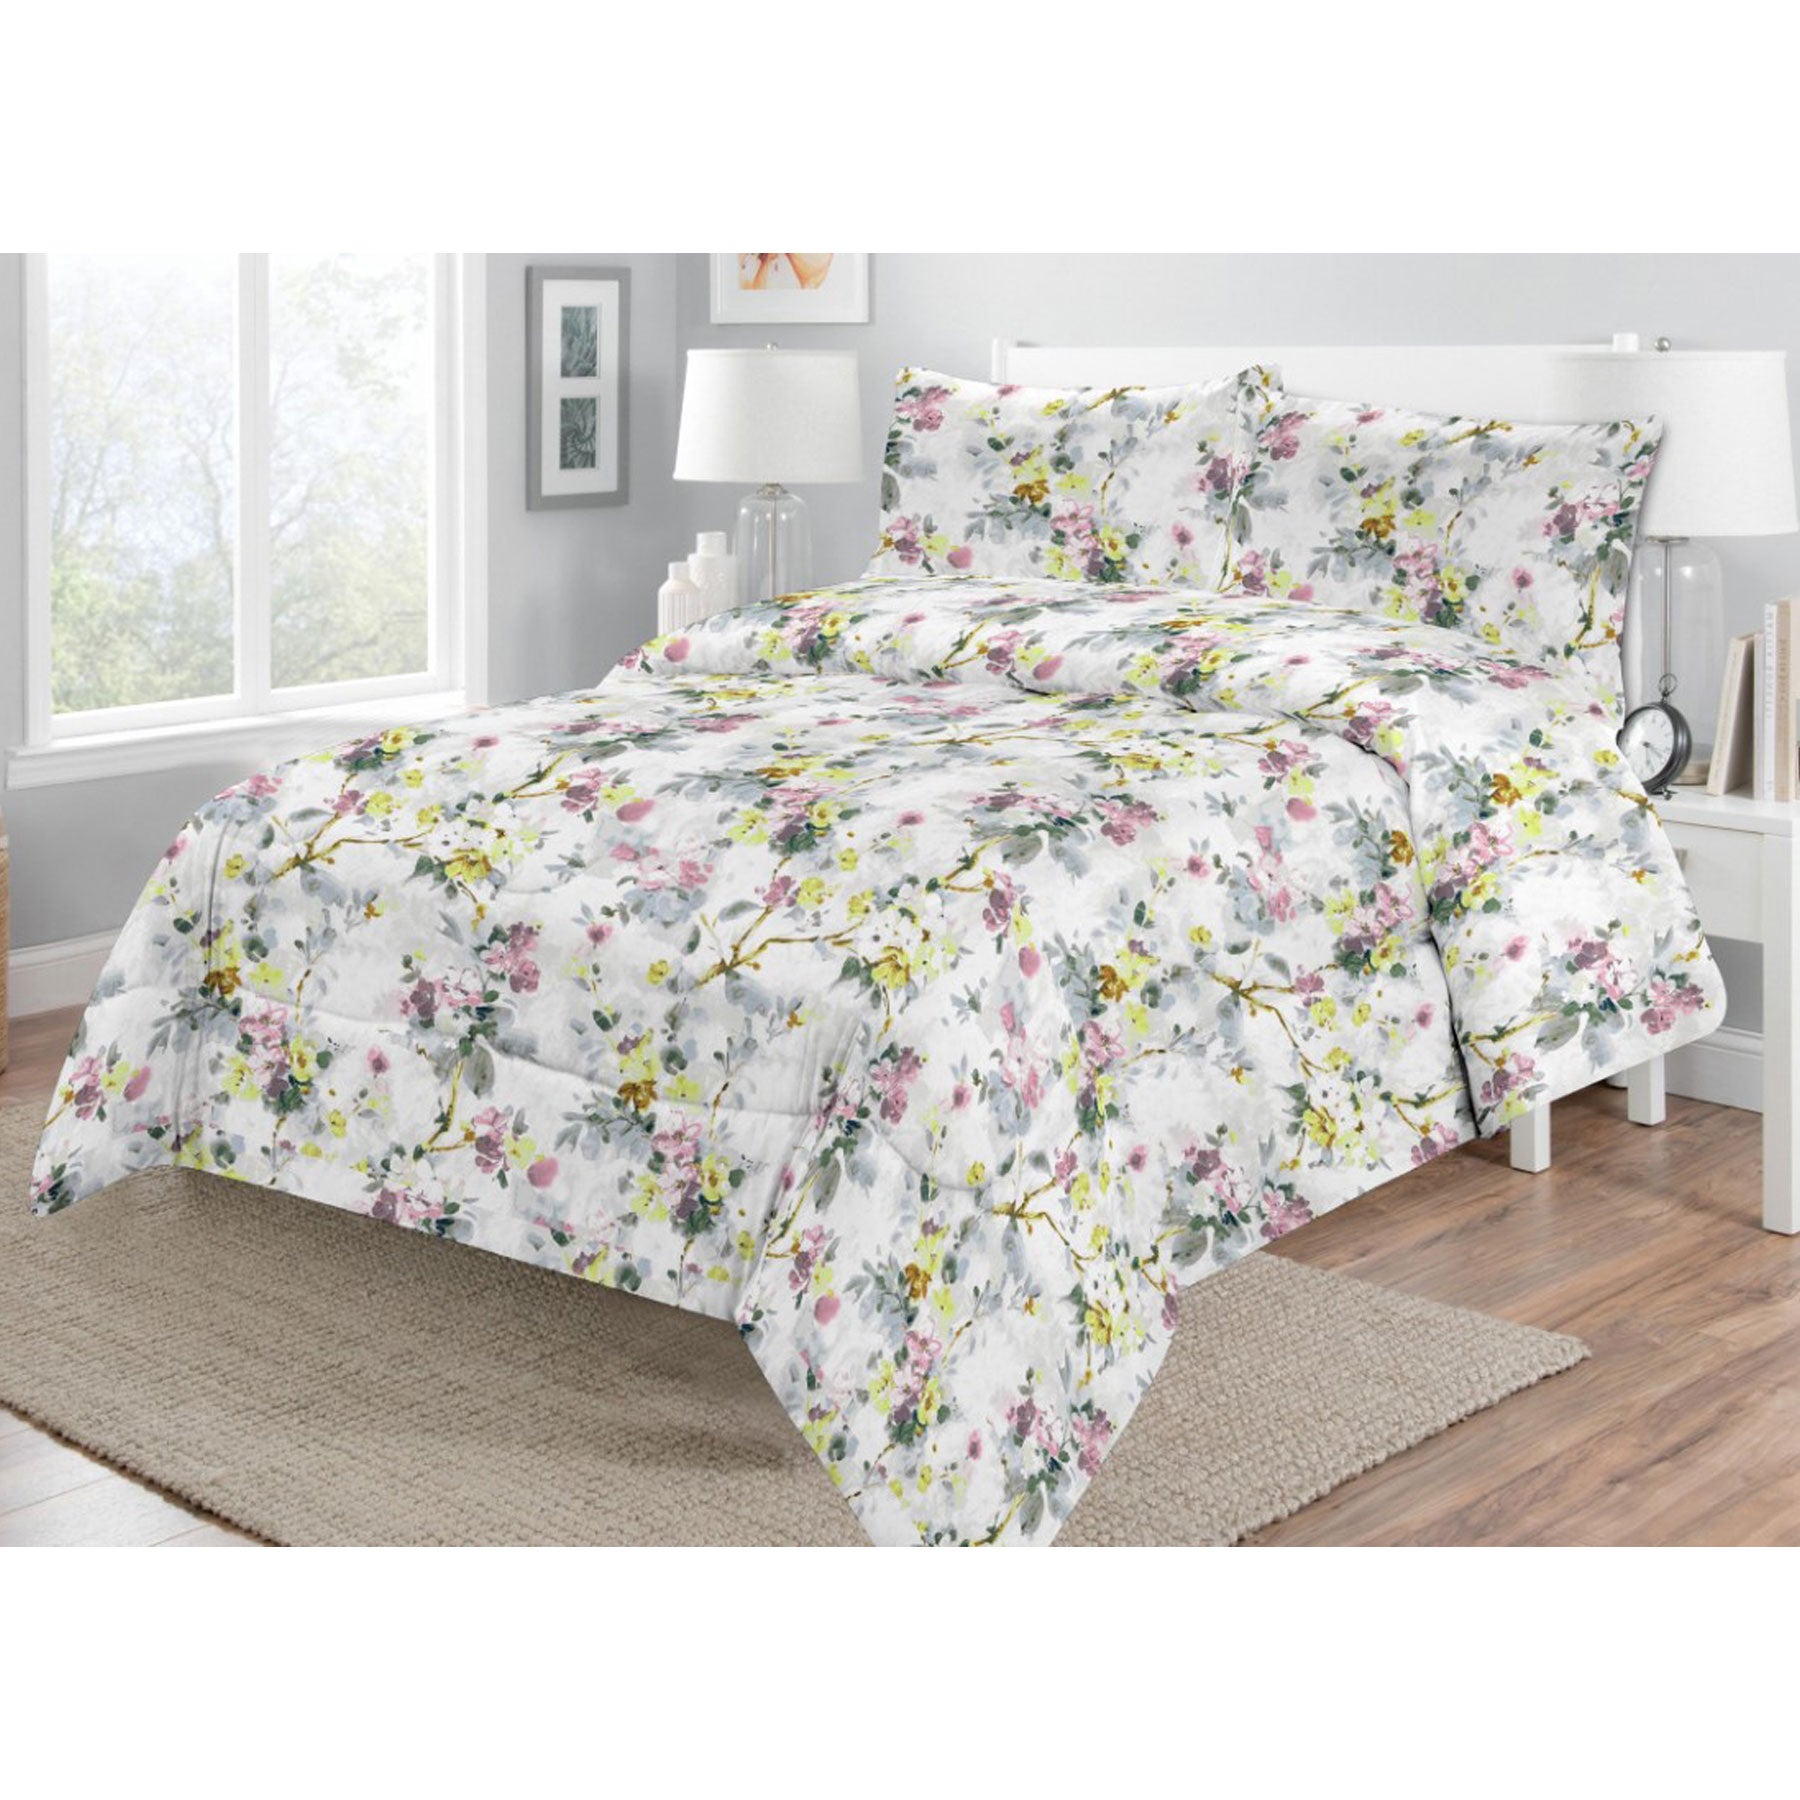 Katy Printed Quilt/Comforter Set